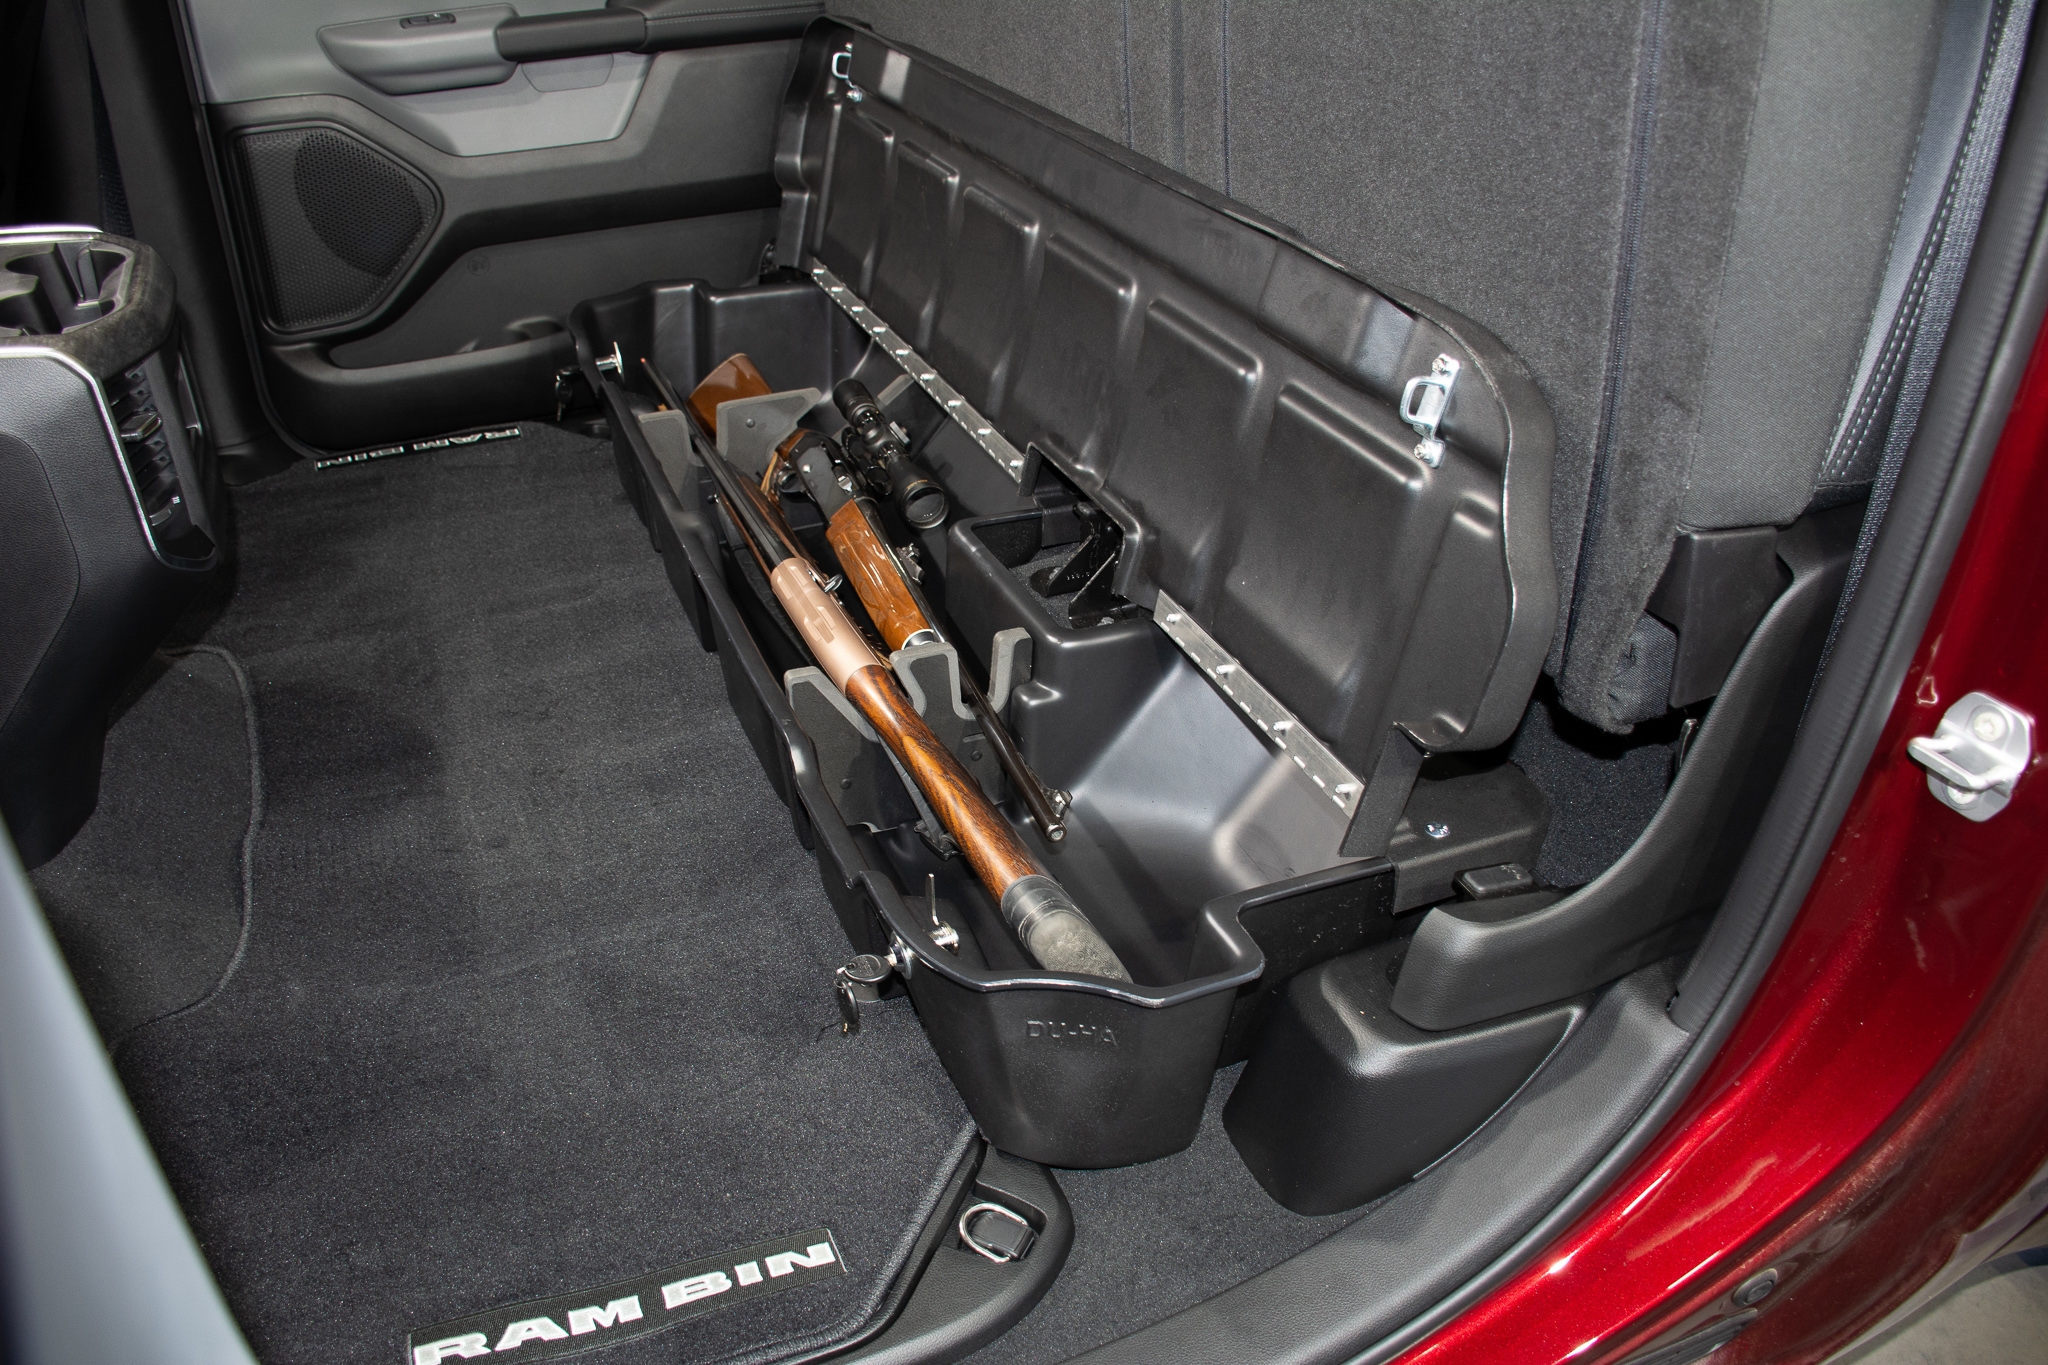 DU-HA Underseat Storage / Gun Case - This DU-HA will hold 2 shotguns or rifles without scopes.